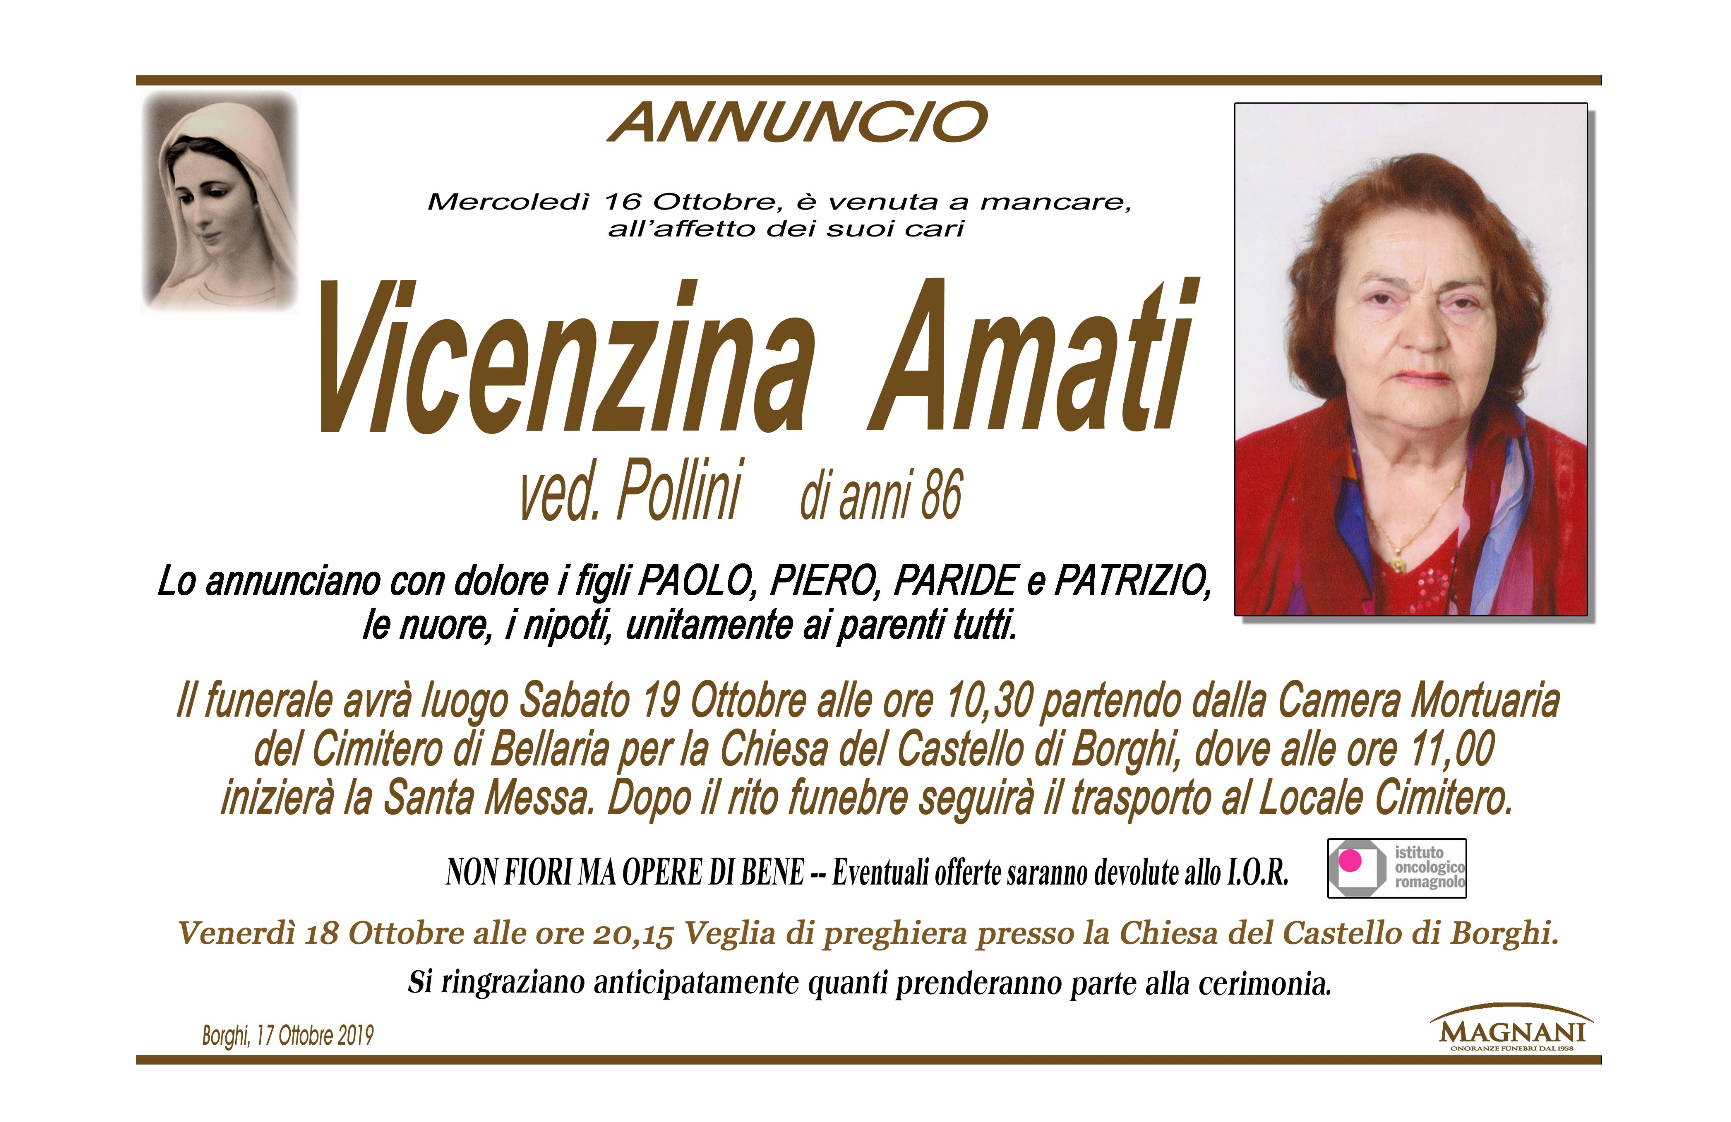 Vincenzina Amati